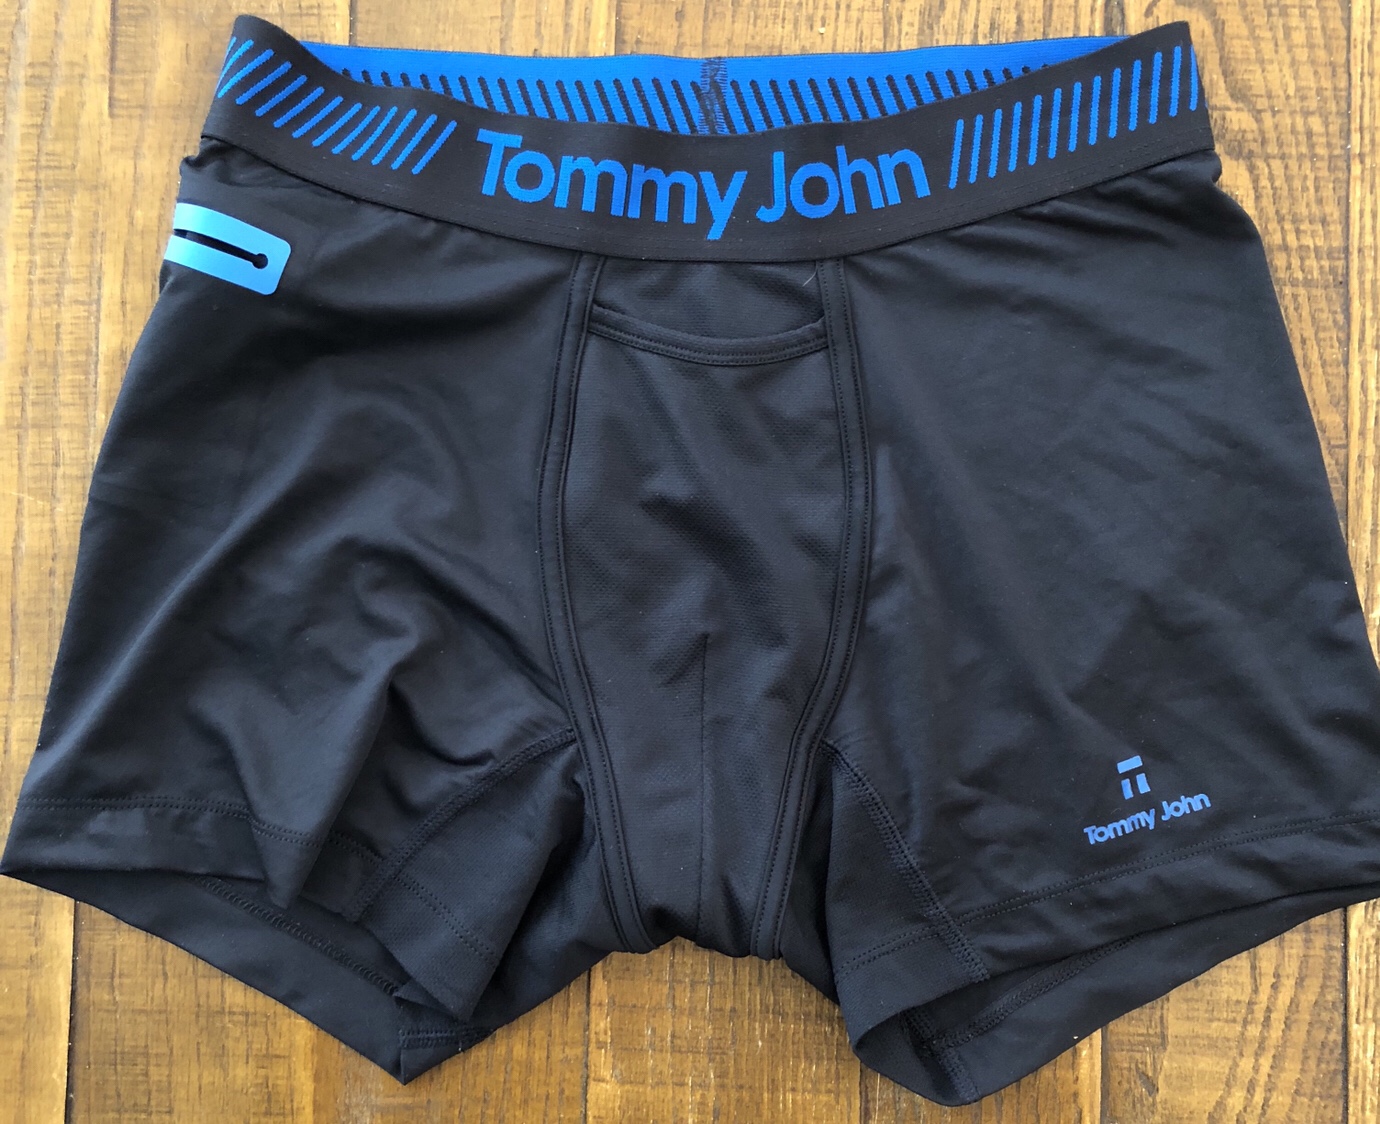 tommy john compression shorts